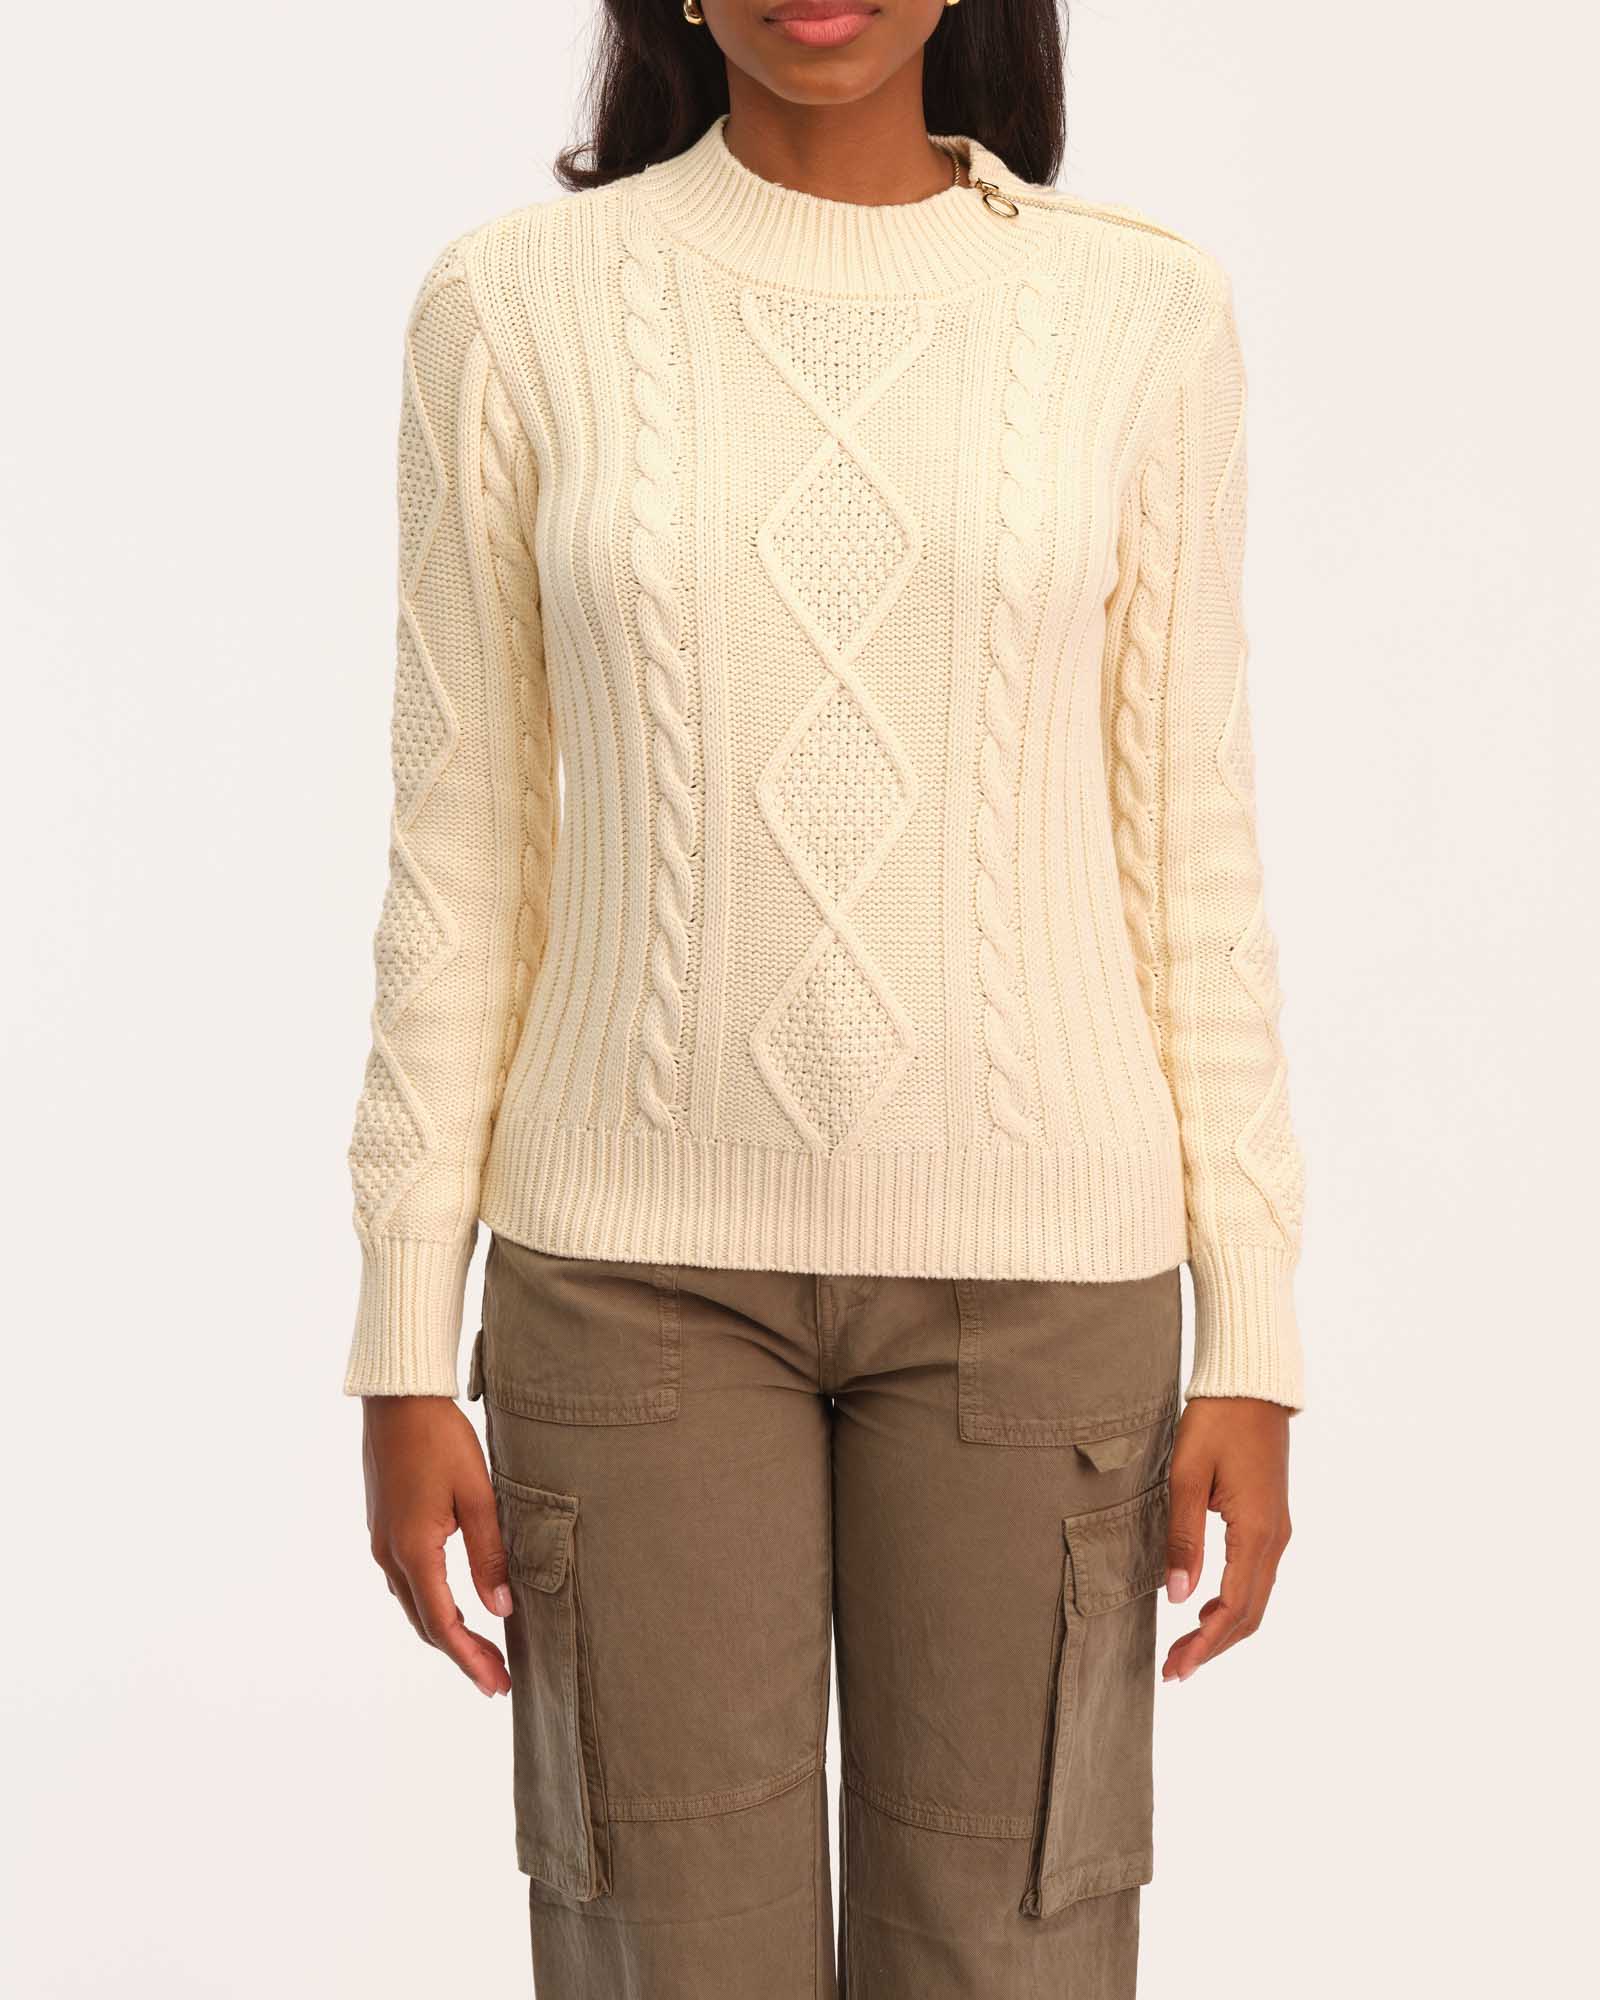 Shop Elie Elie Tahari Women's Cable Knit Sweater with Shoulder Zipper | JANE + MERCER